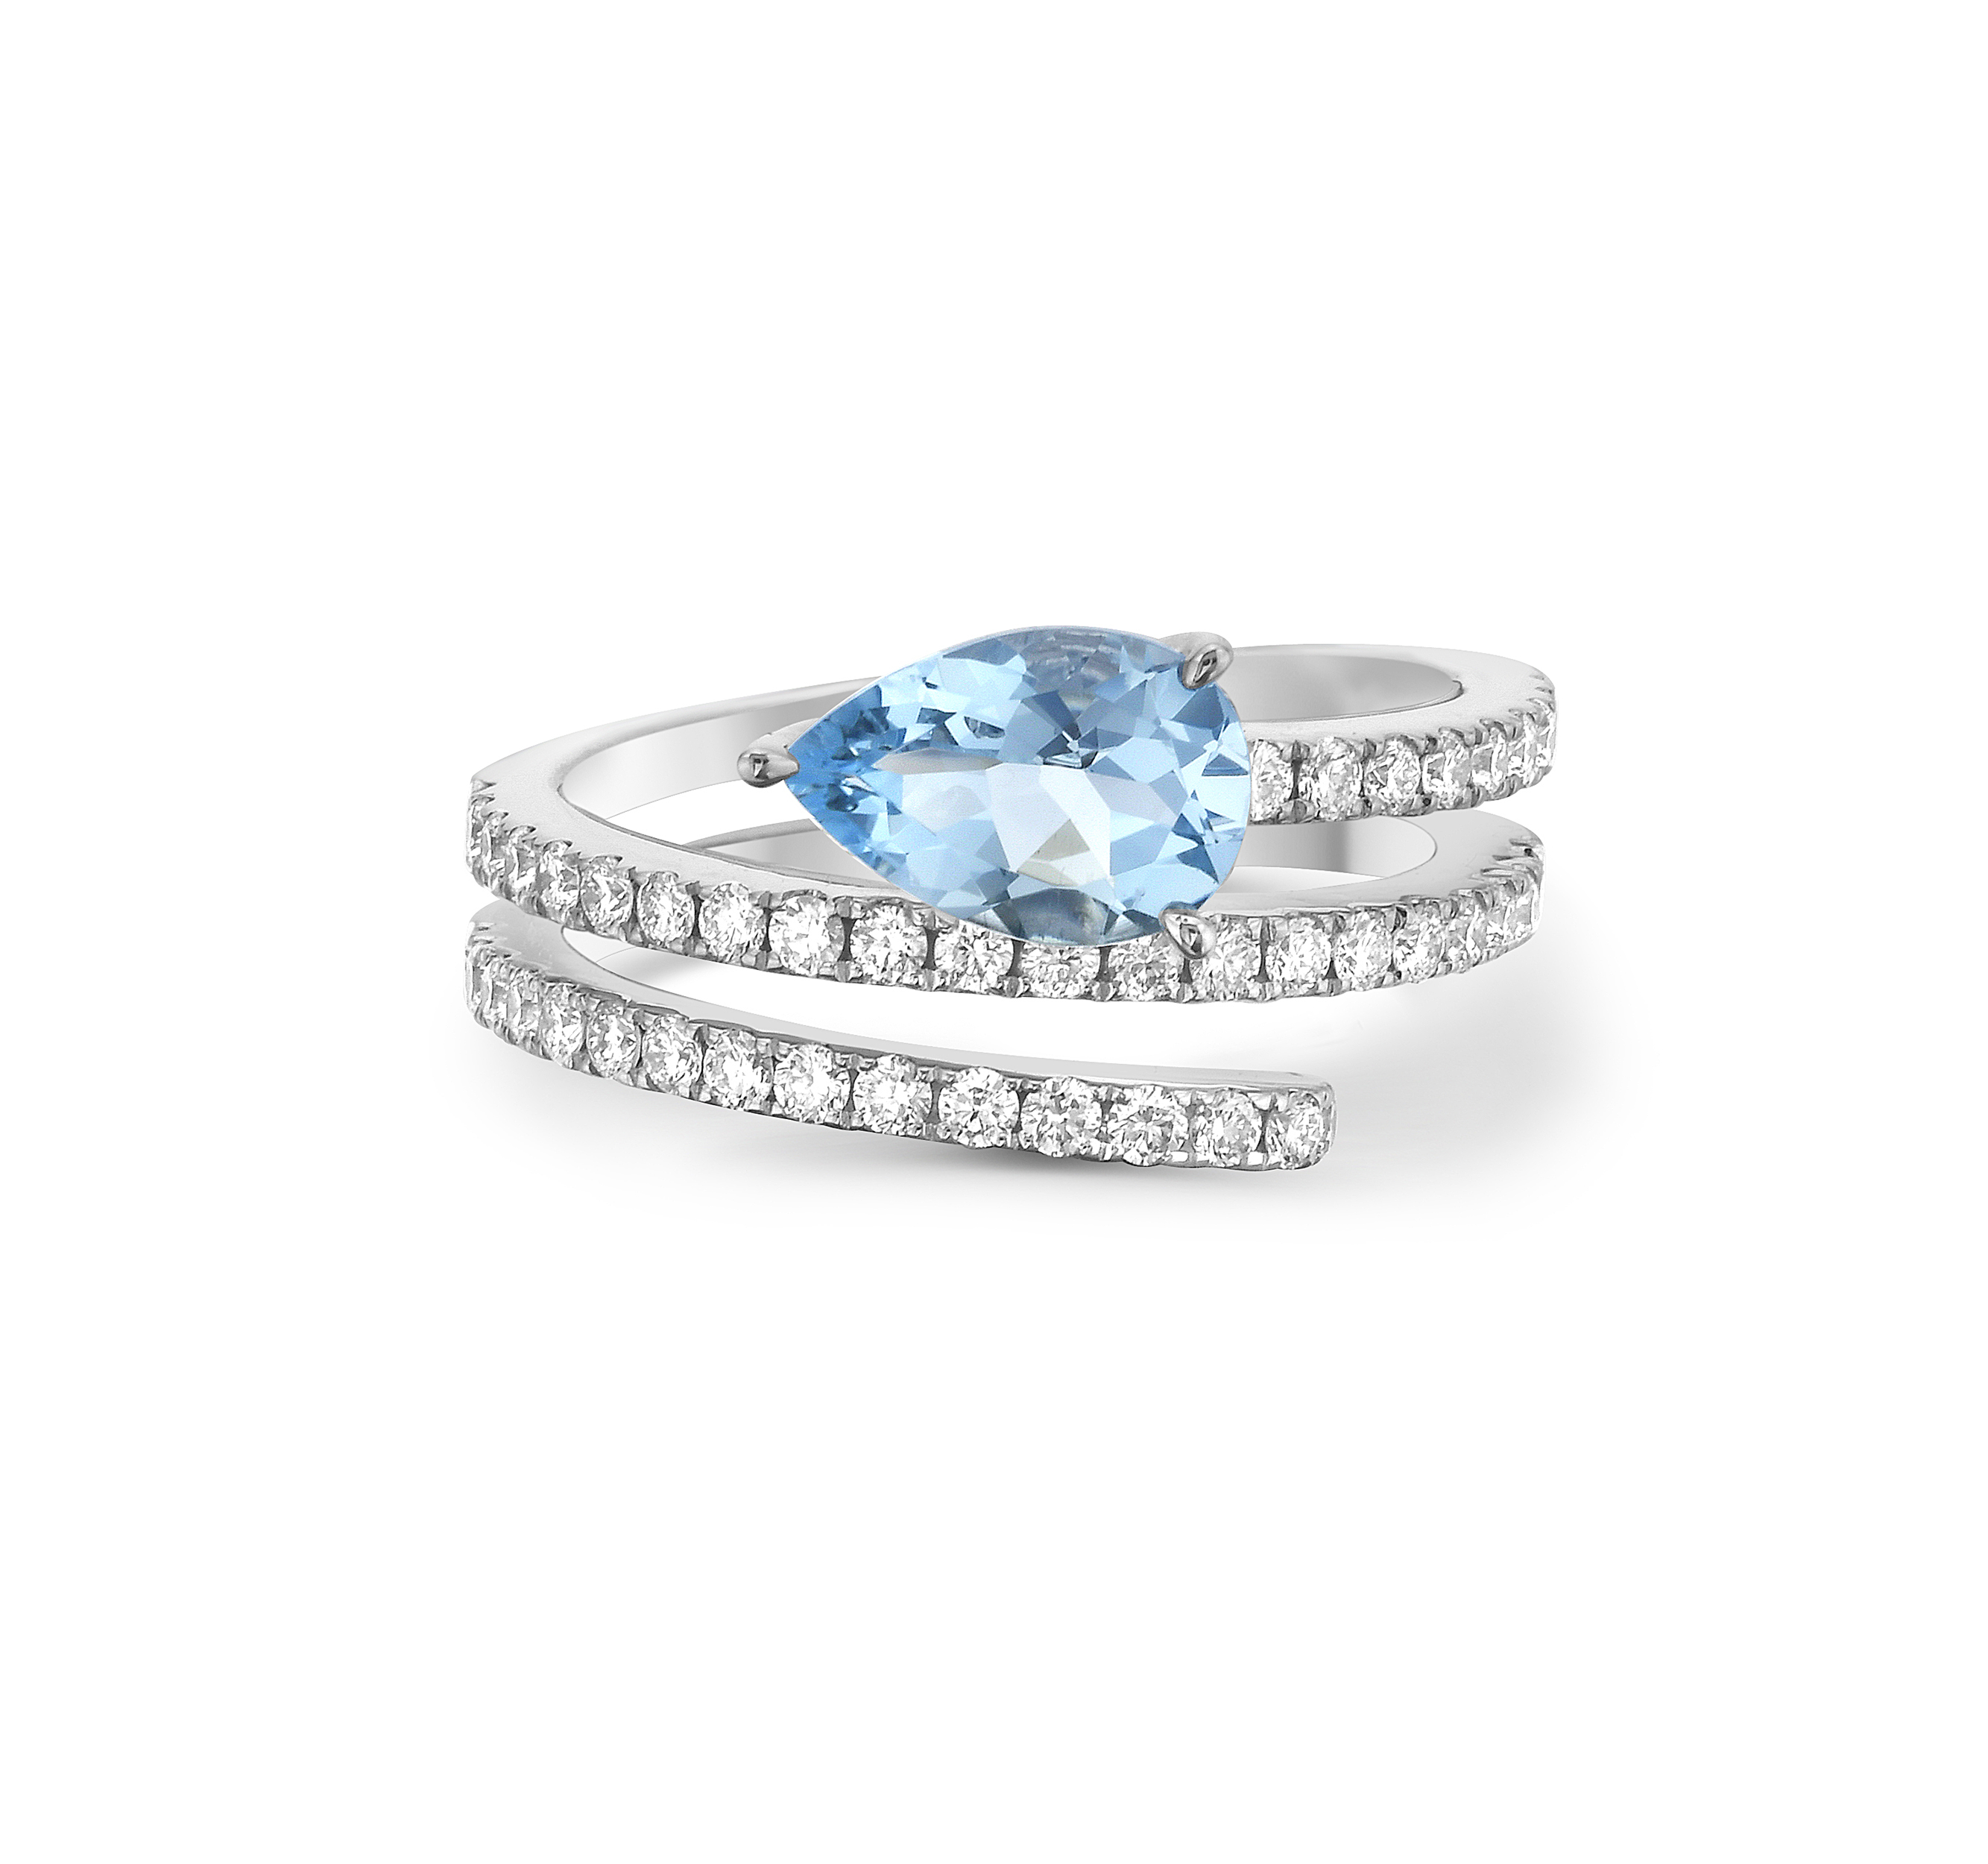 Triple Wrap Diamond Ring with Aquamarine